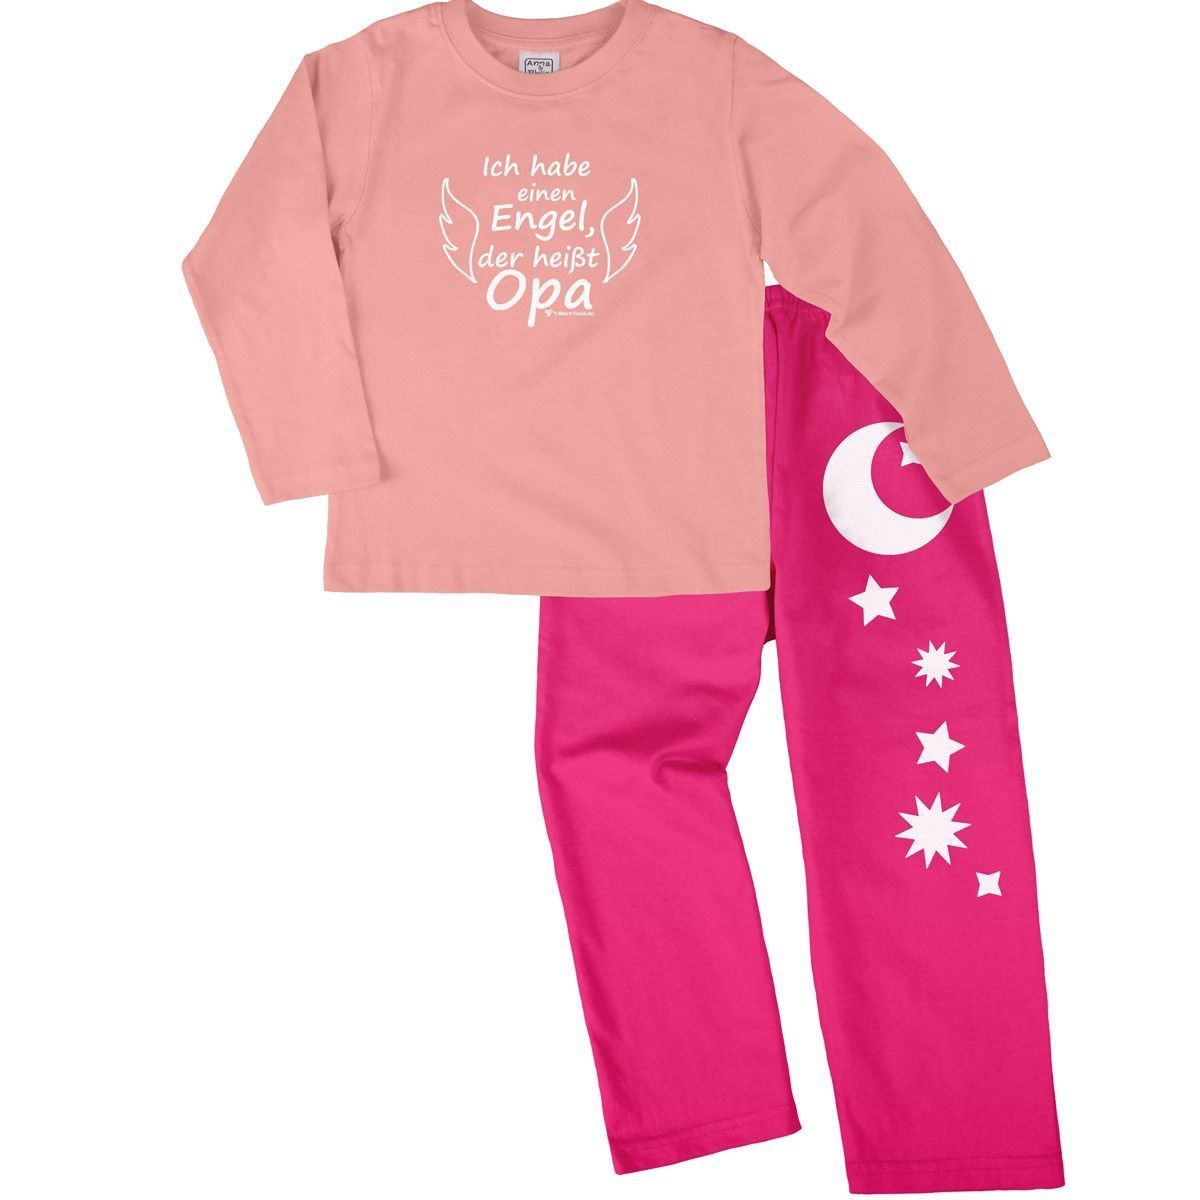 Engel Opa Pyjama Set rosa / pink 110 / 116